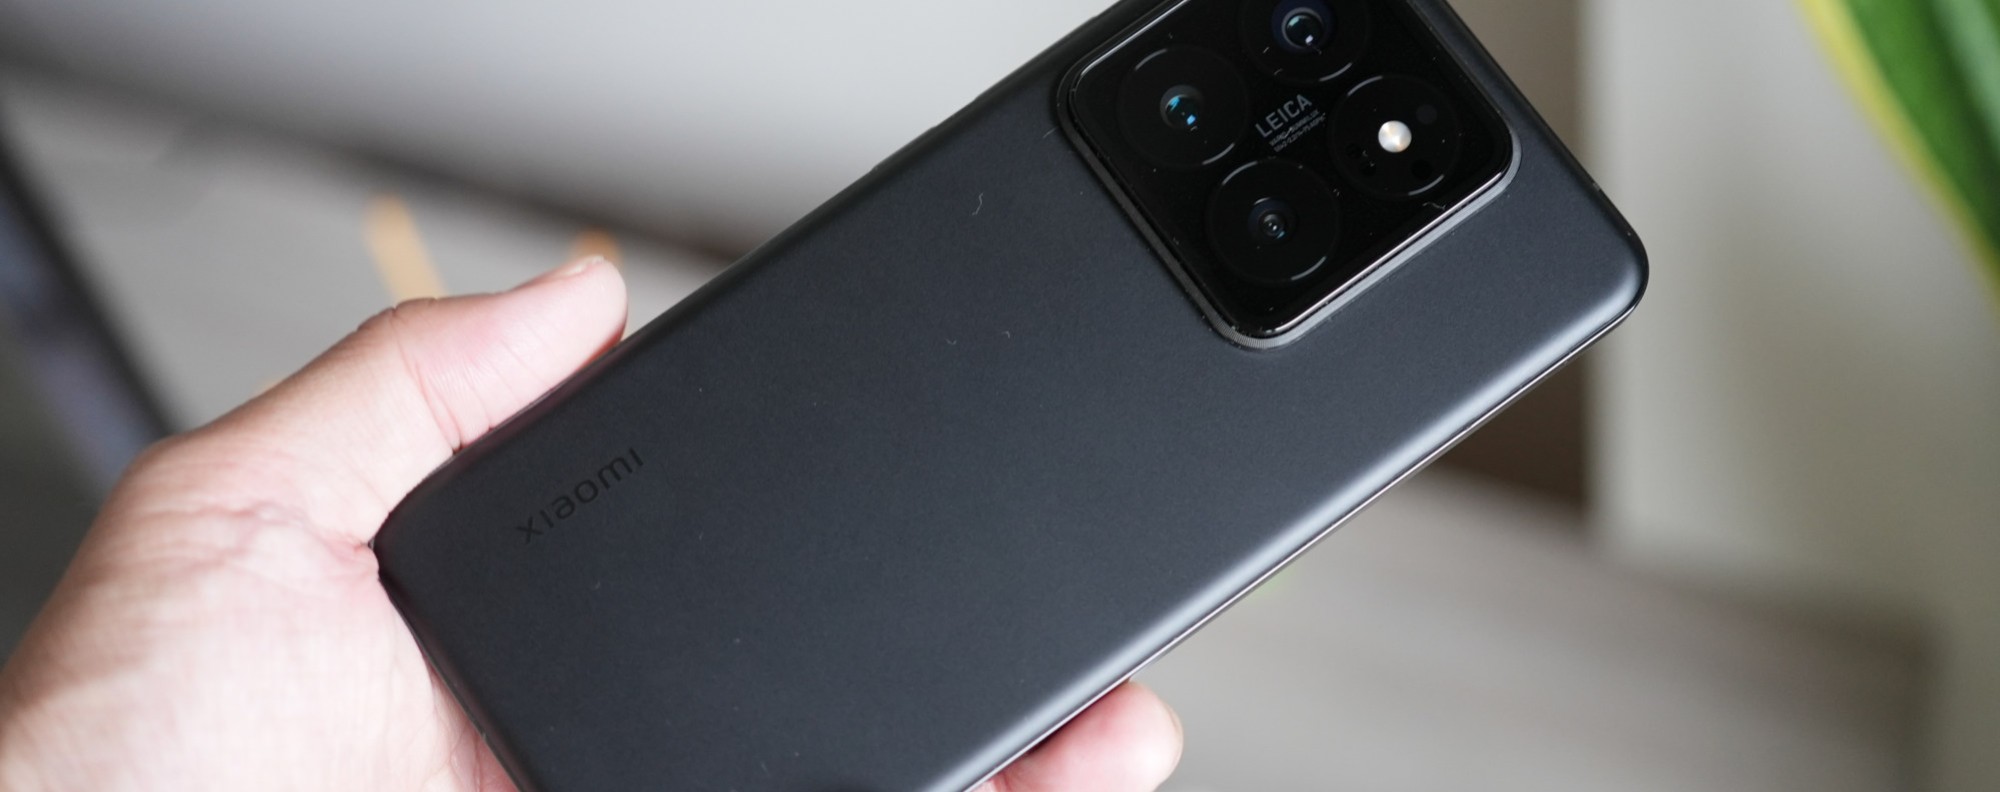 Xiaomi 14 Pro Titanium Review: Top-End Hardware, Flagship Cameras